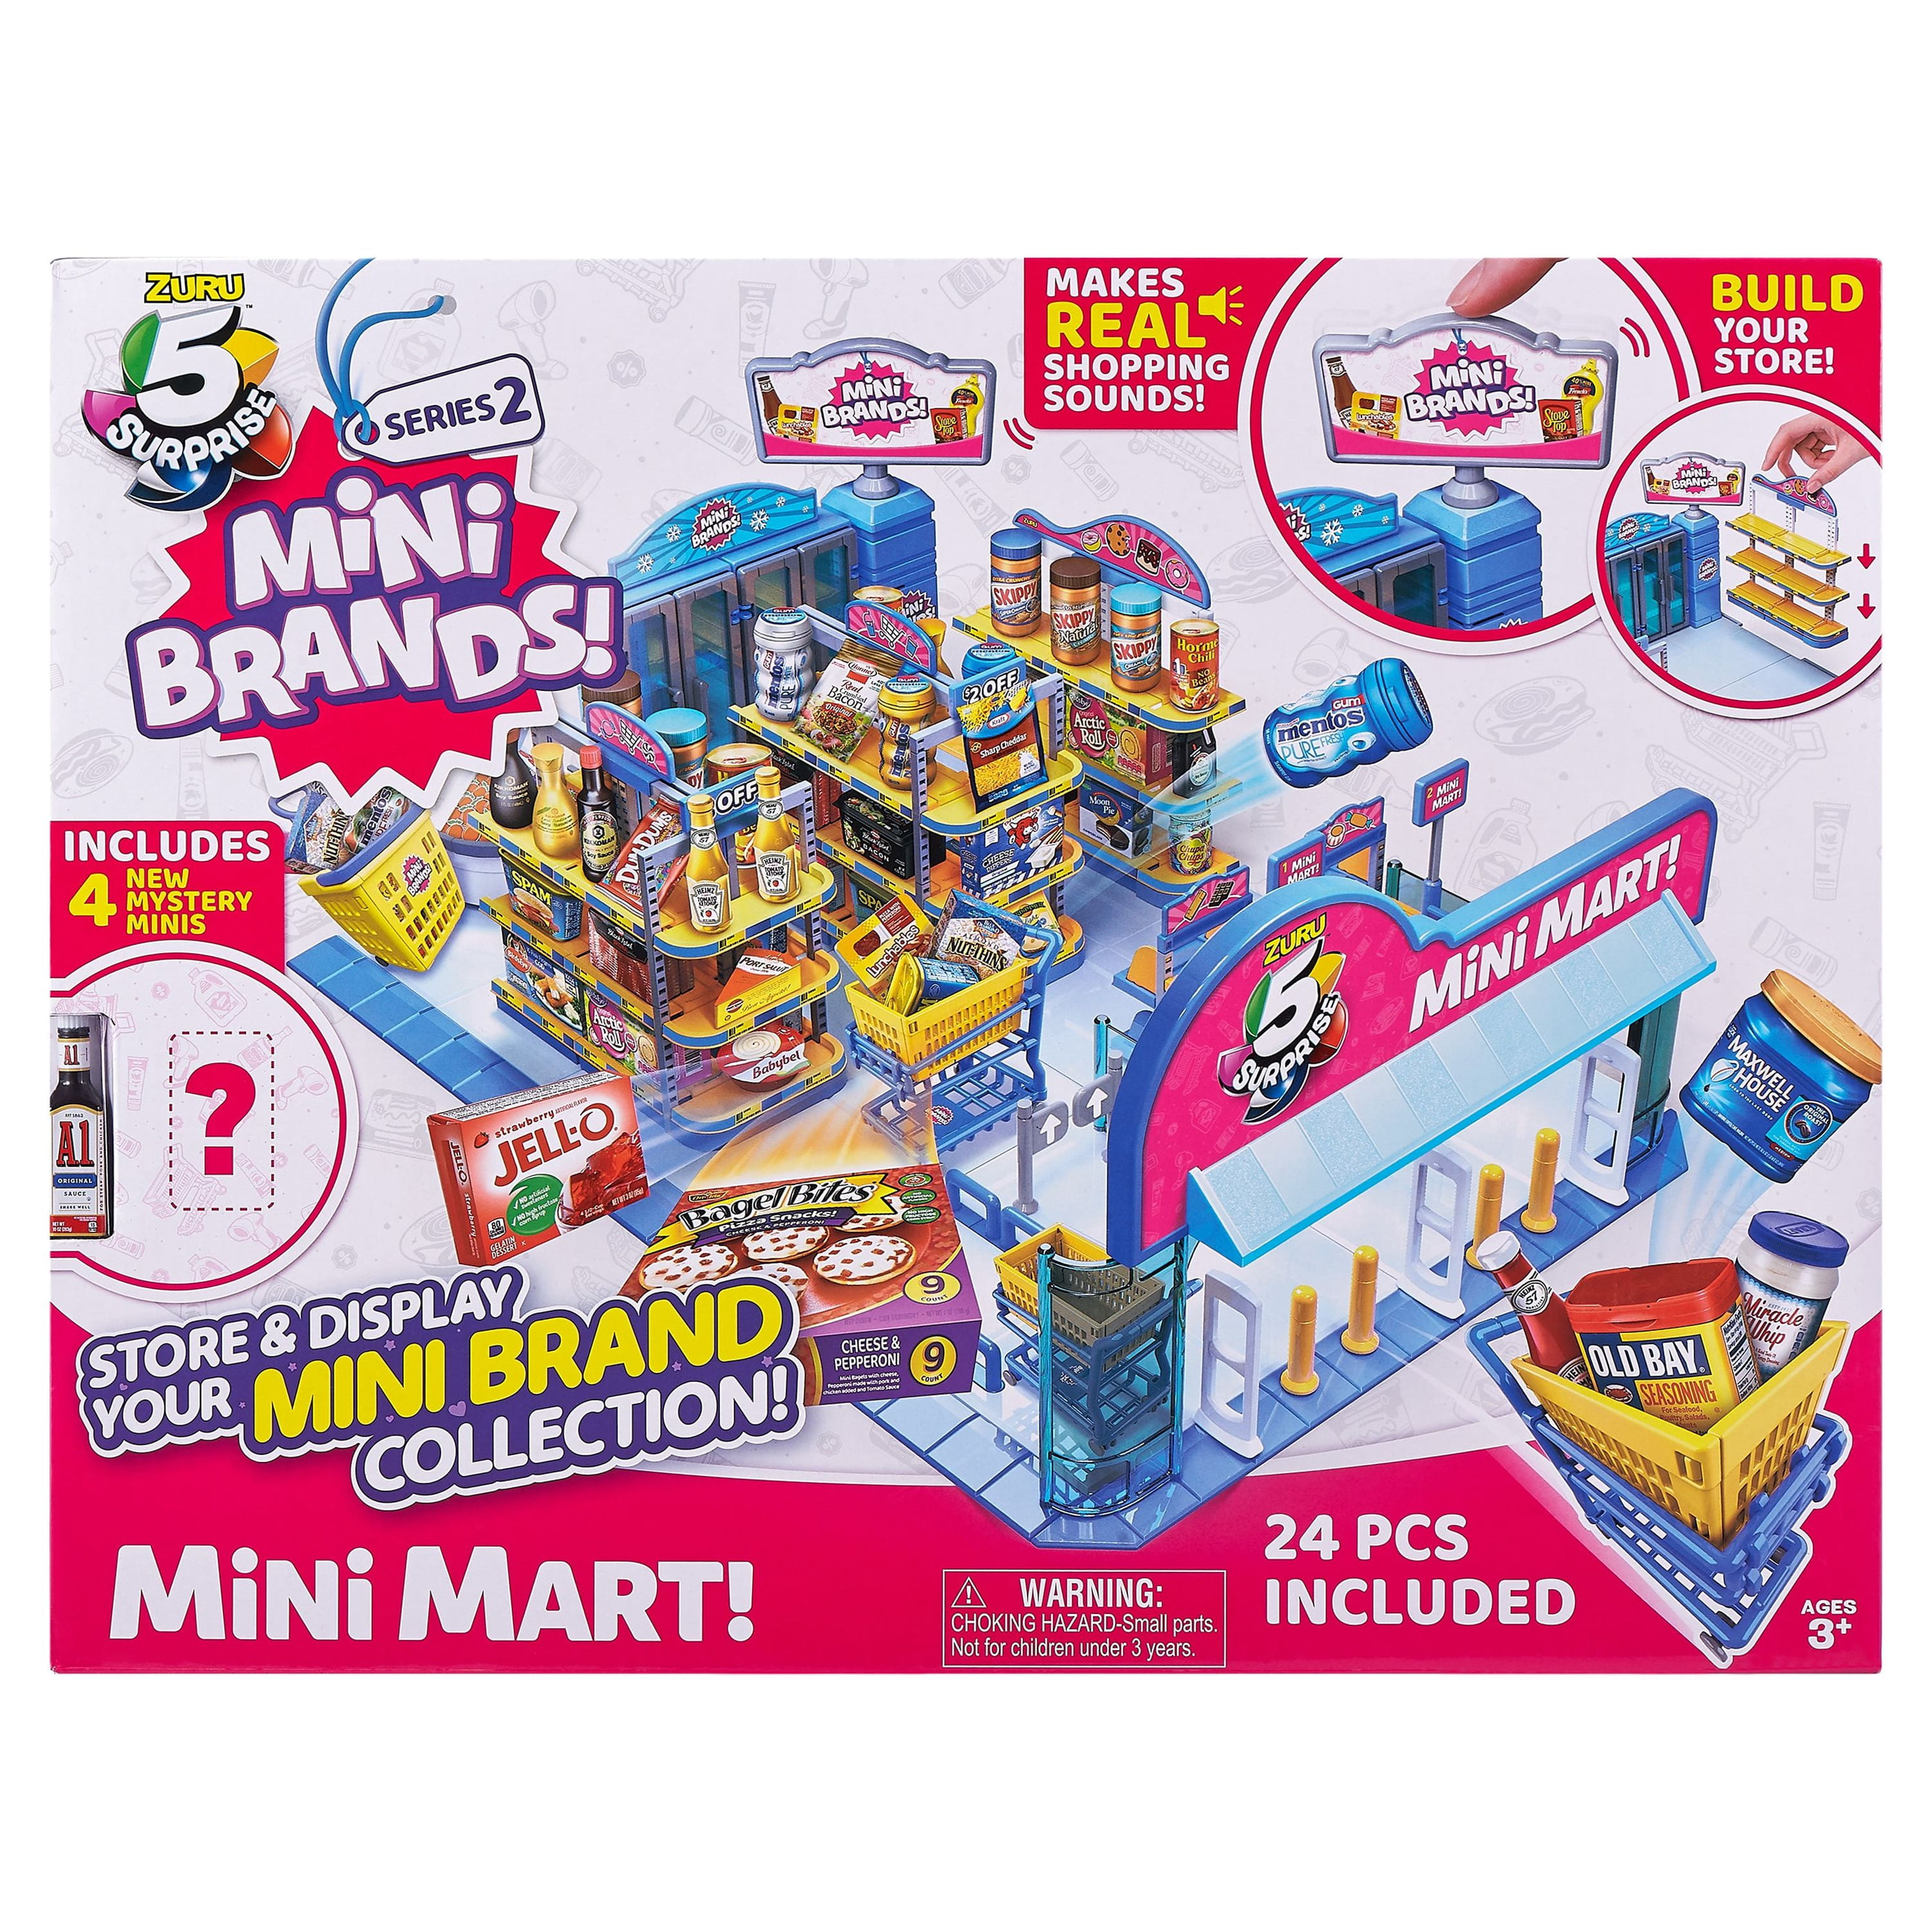 Mini Brands Series 2 Electronic Mini Mart with 4 Mystery Mini Brands  Playset by ZURU